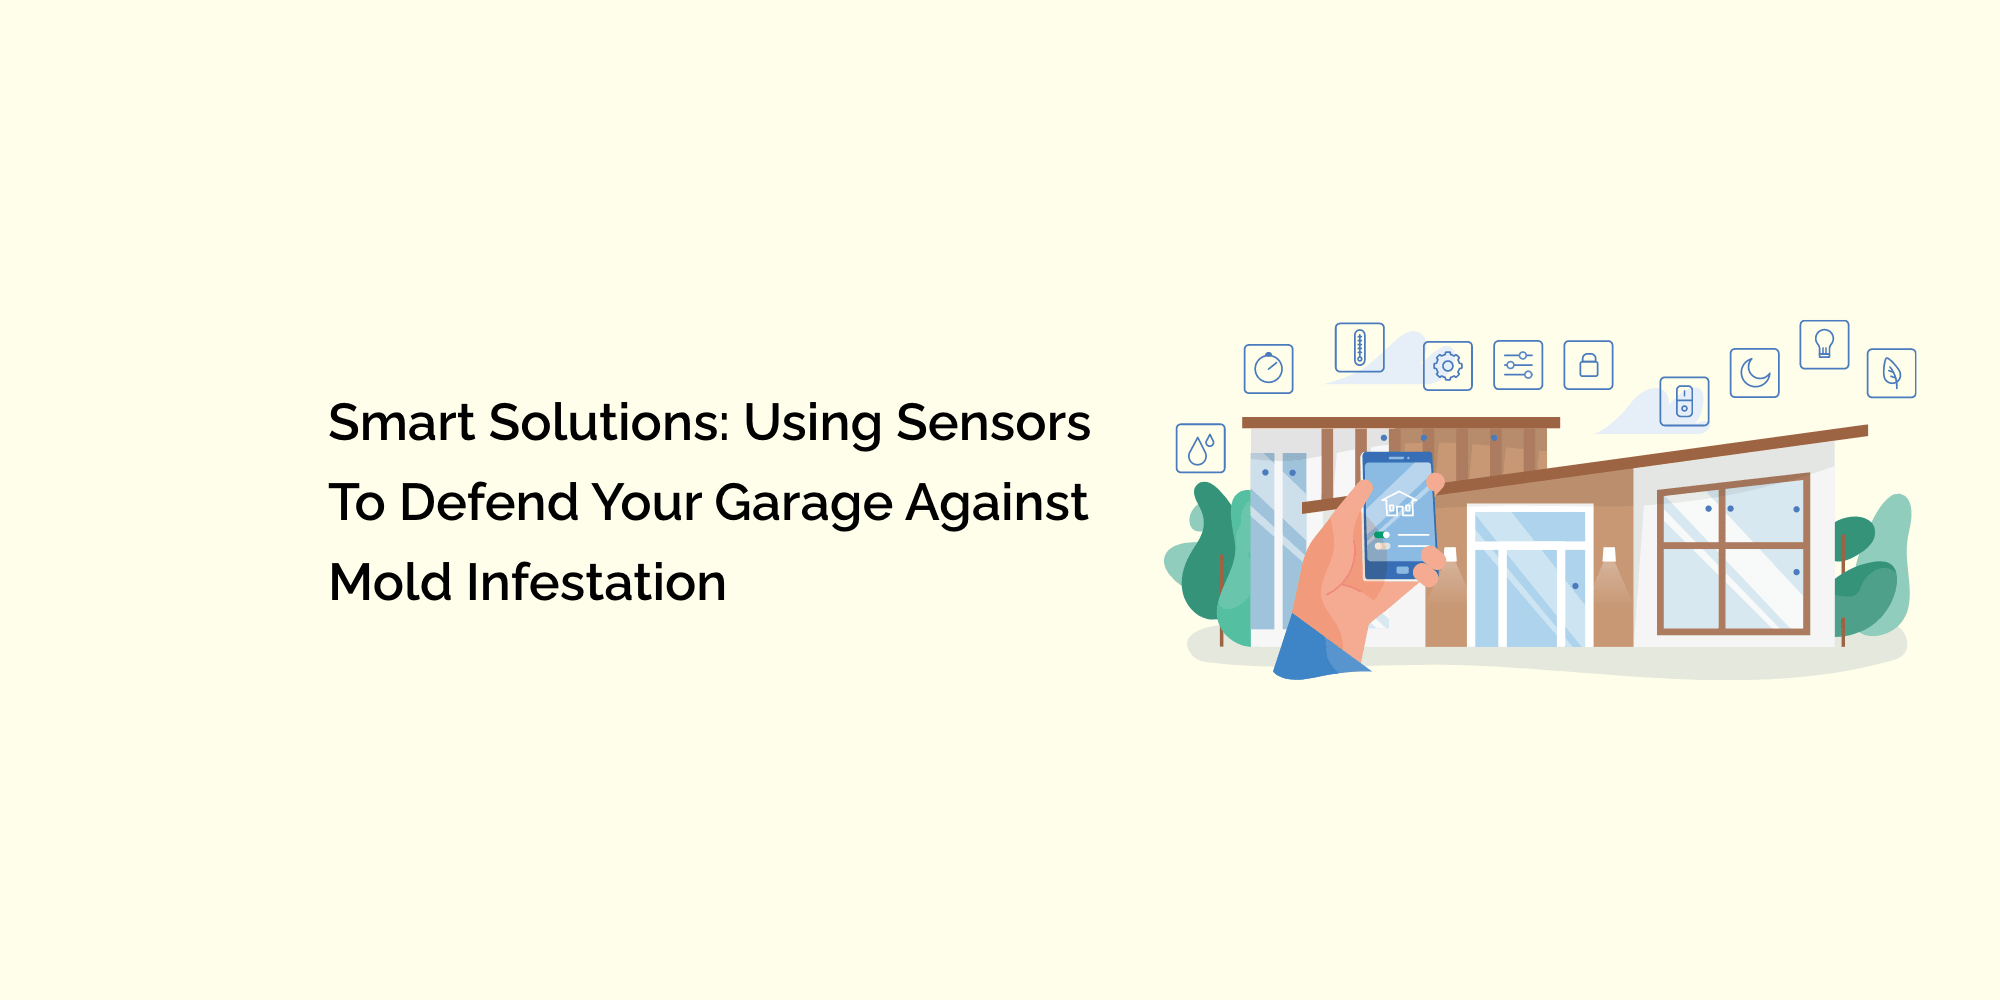 Smart Solutions: Using Sensors to Defend Your Garage Against Mold Infestation